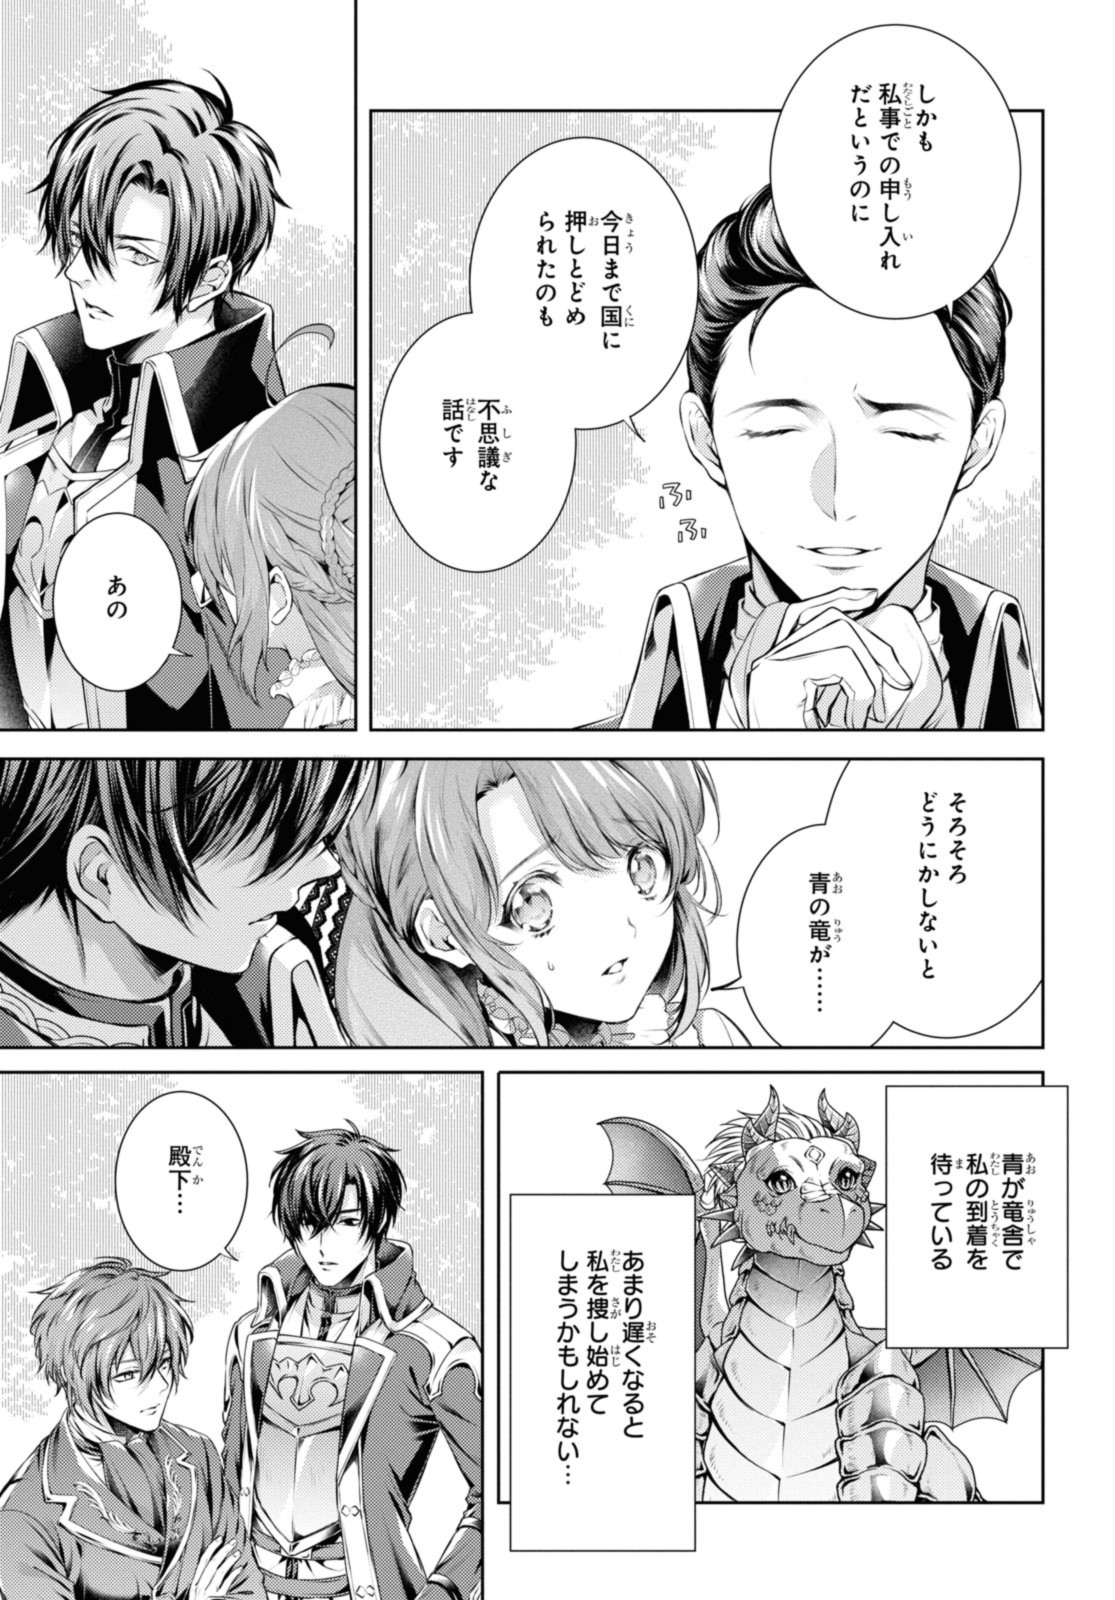 Ryukishi no Okiniiri - Chapter 44.2 - Page 11